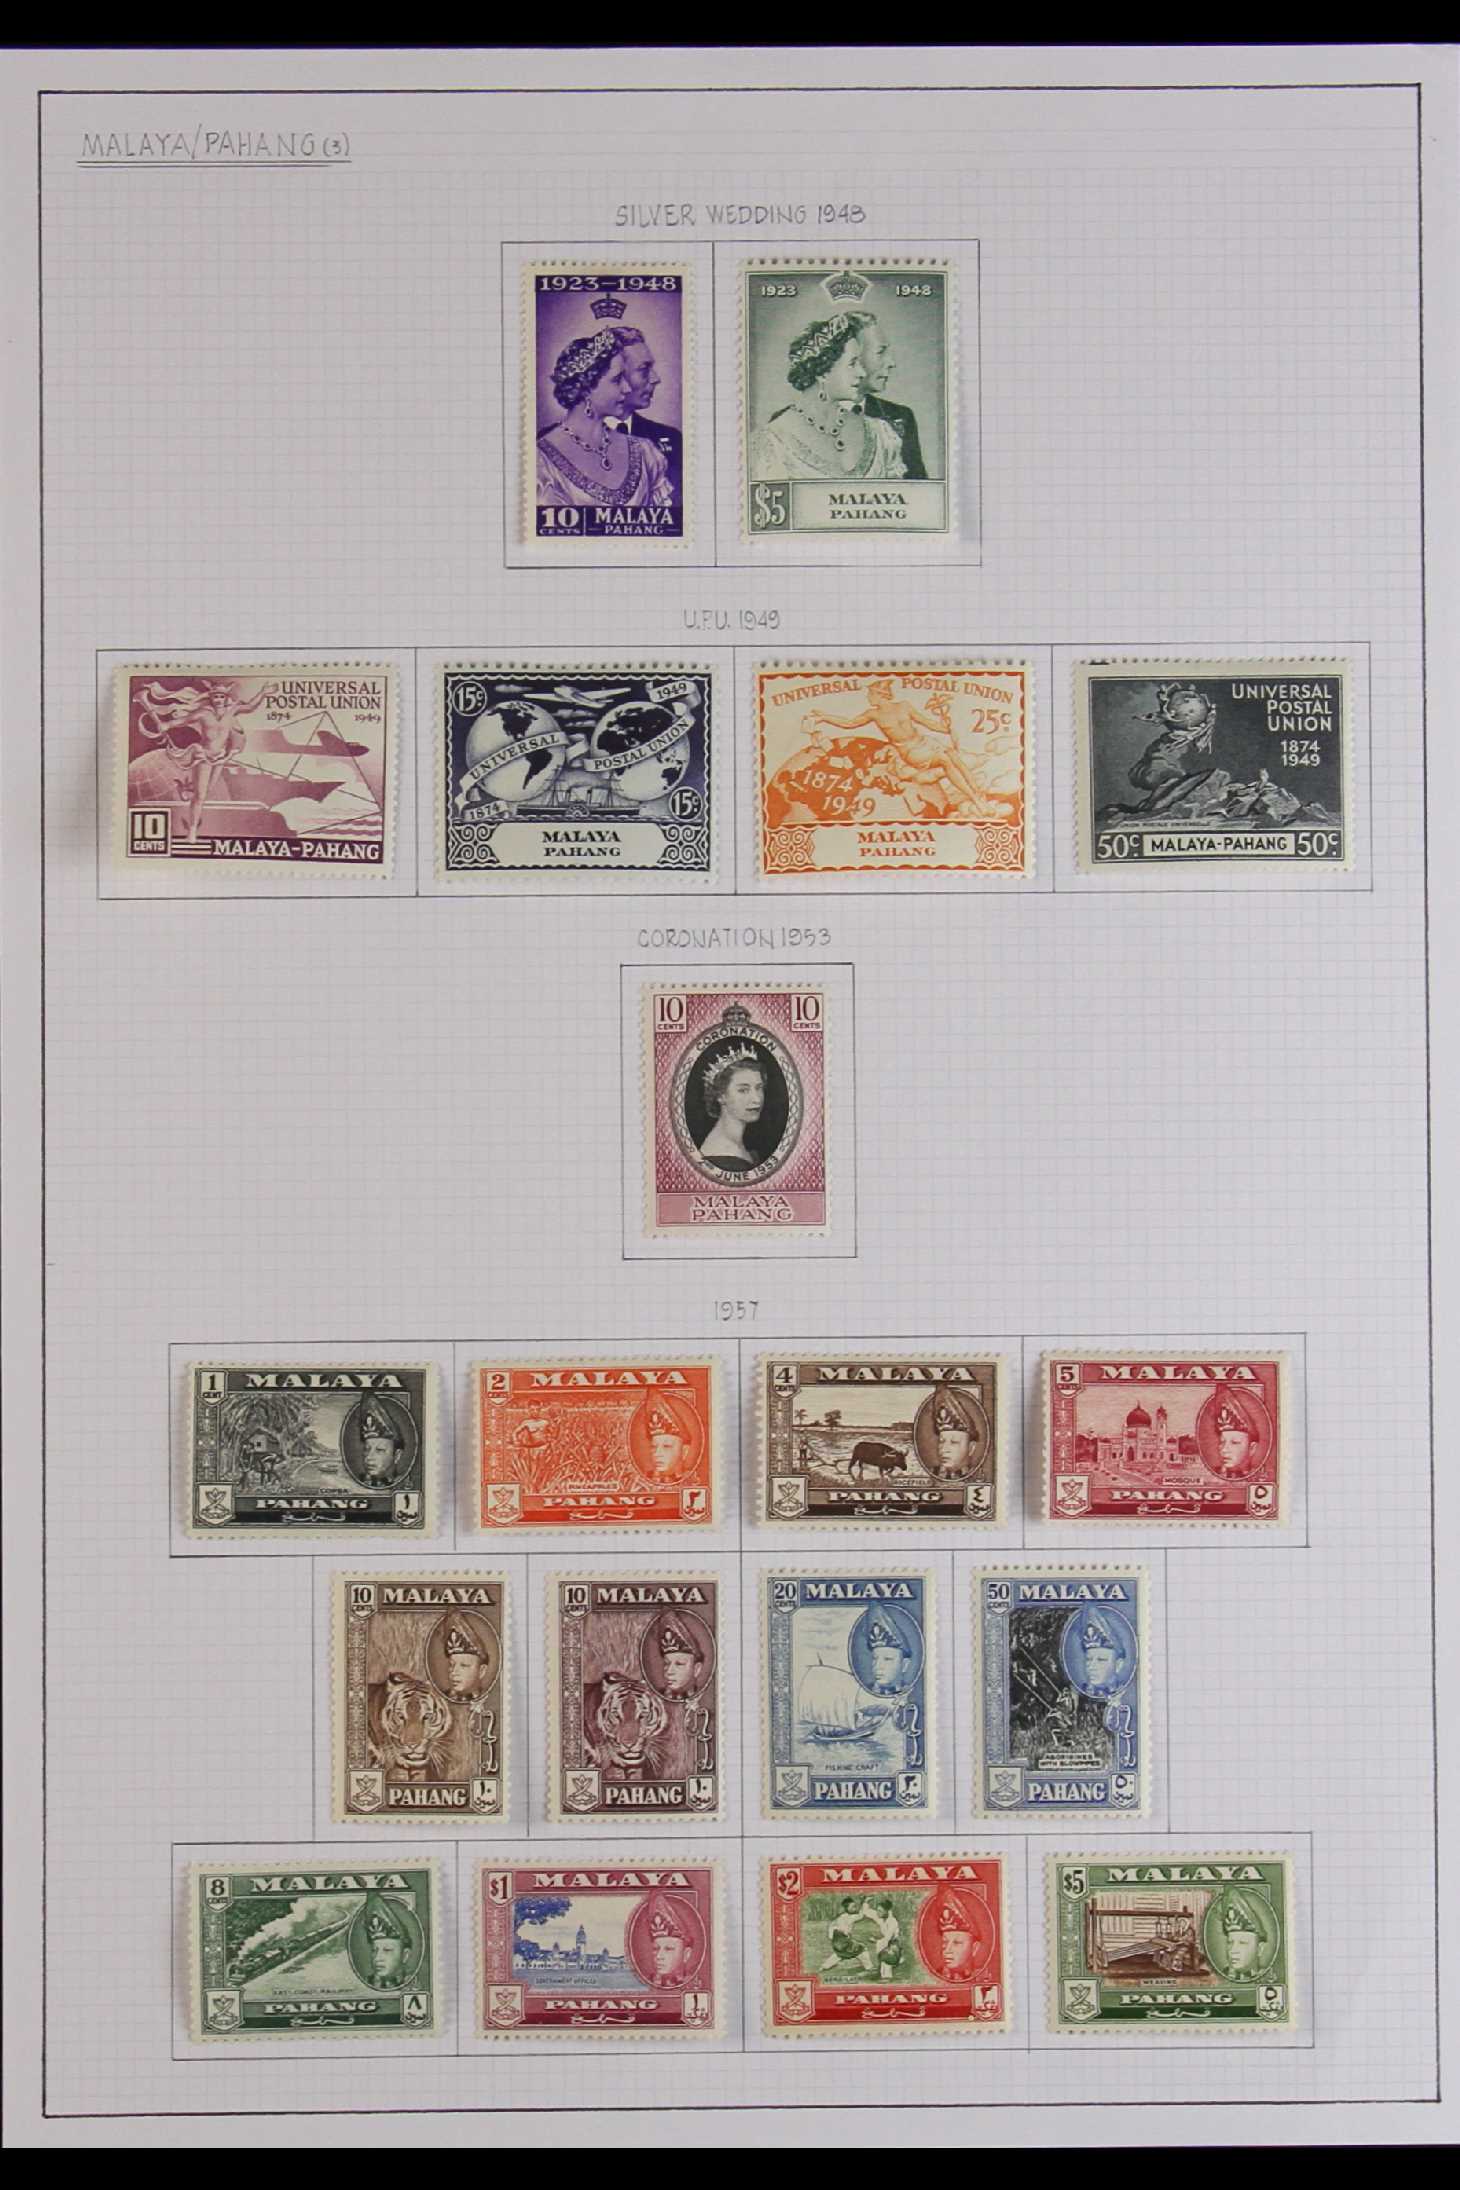 MALAYA STATES PAHANG 1948-57 fine mint complete collection incl. 1948 Wedding set, 1949 UPU set,